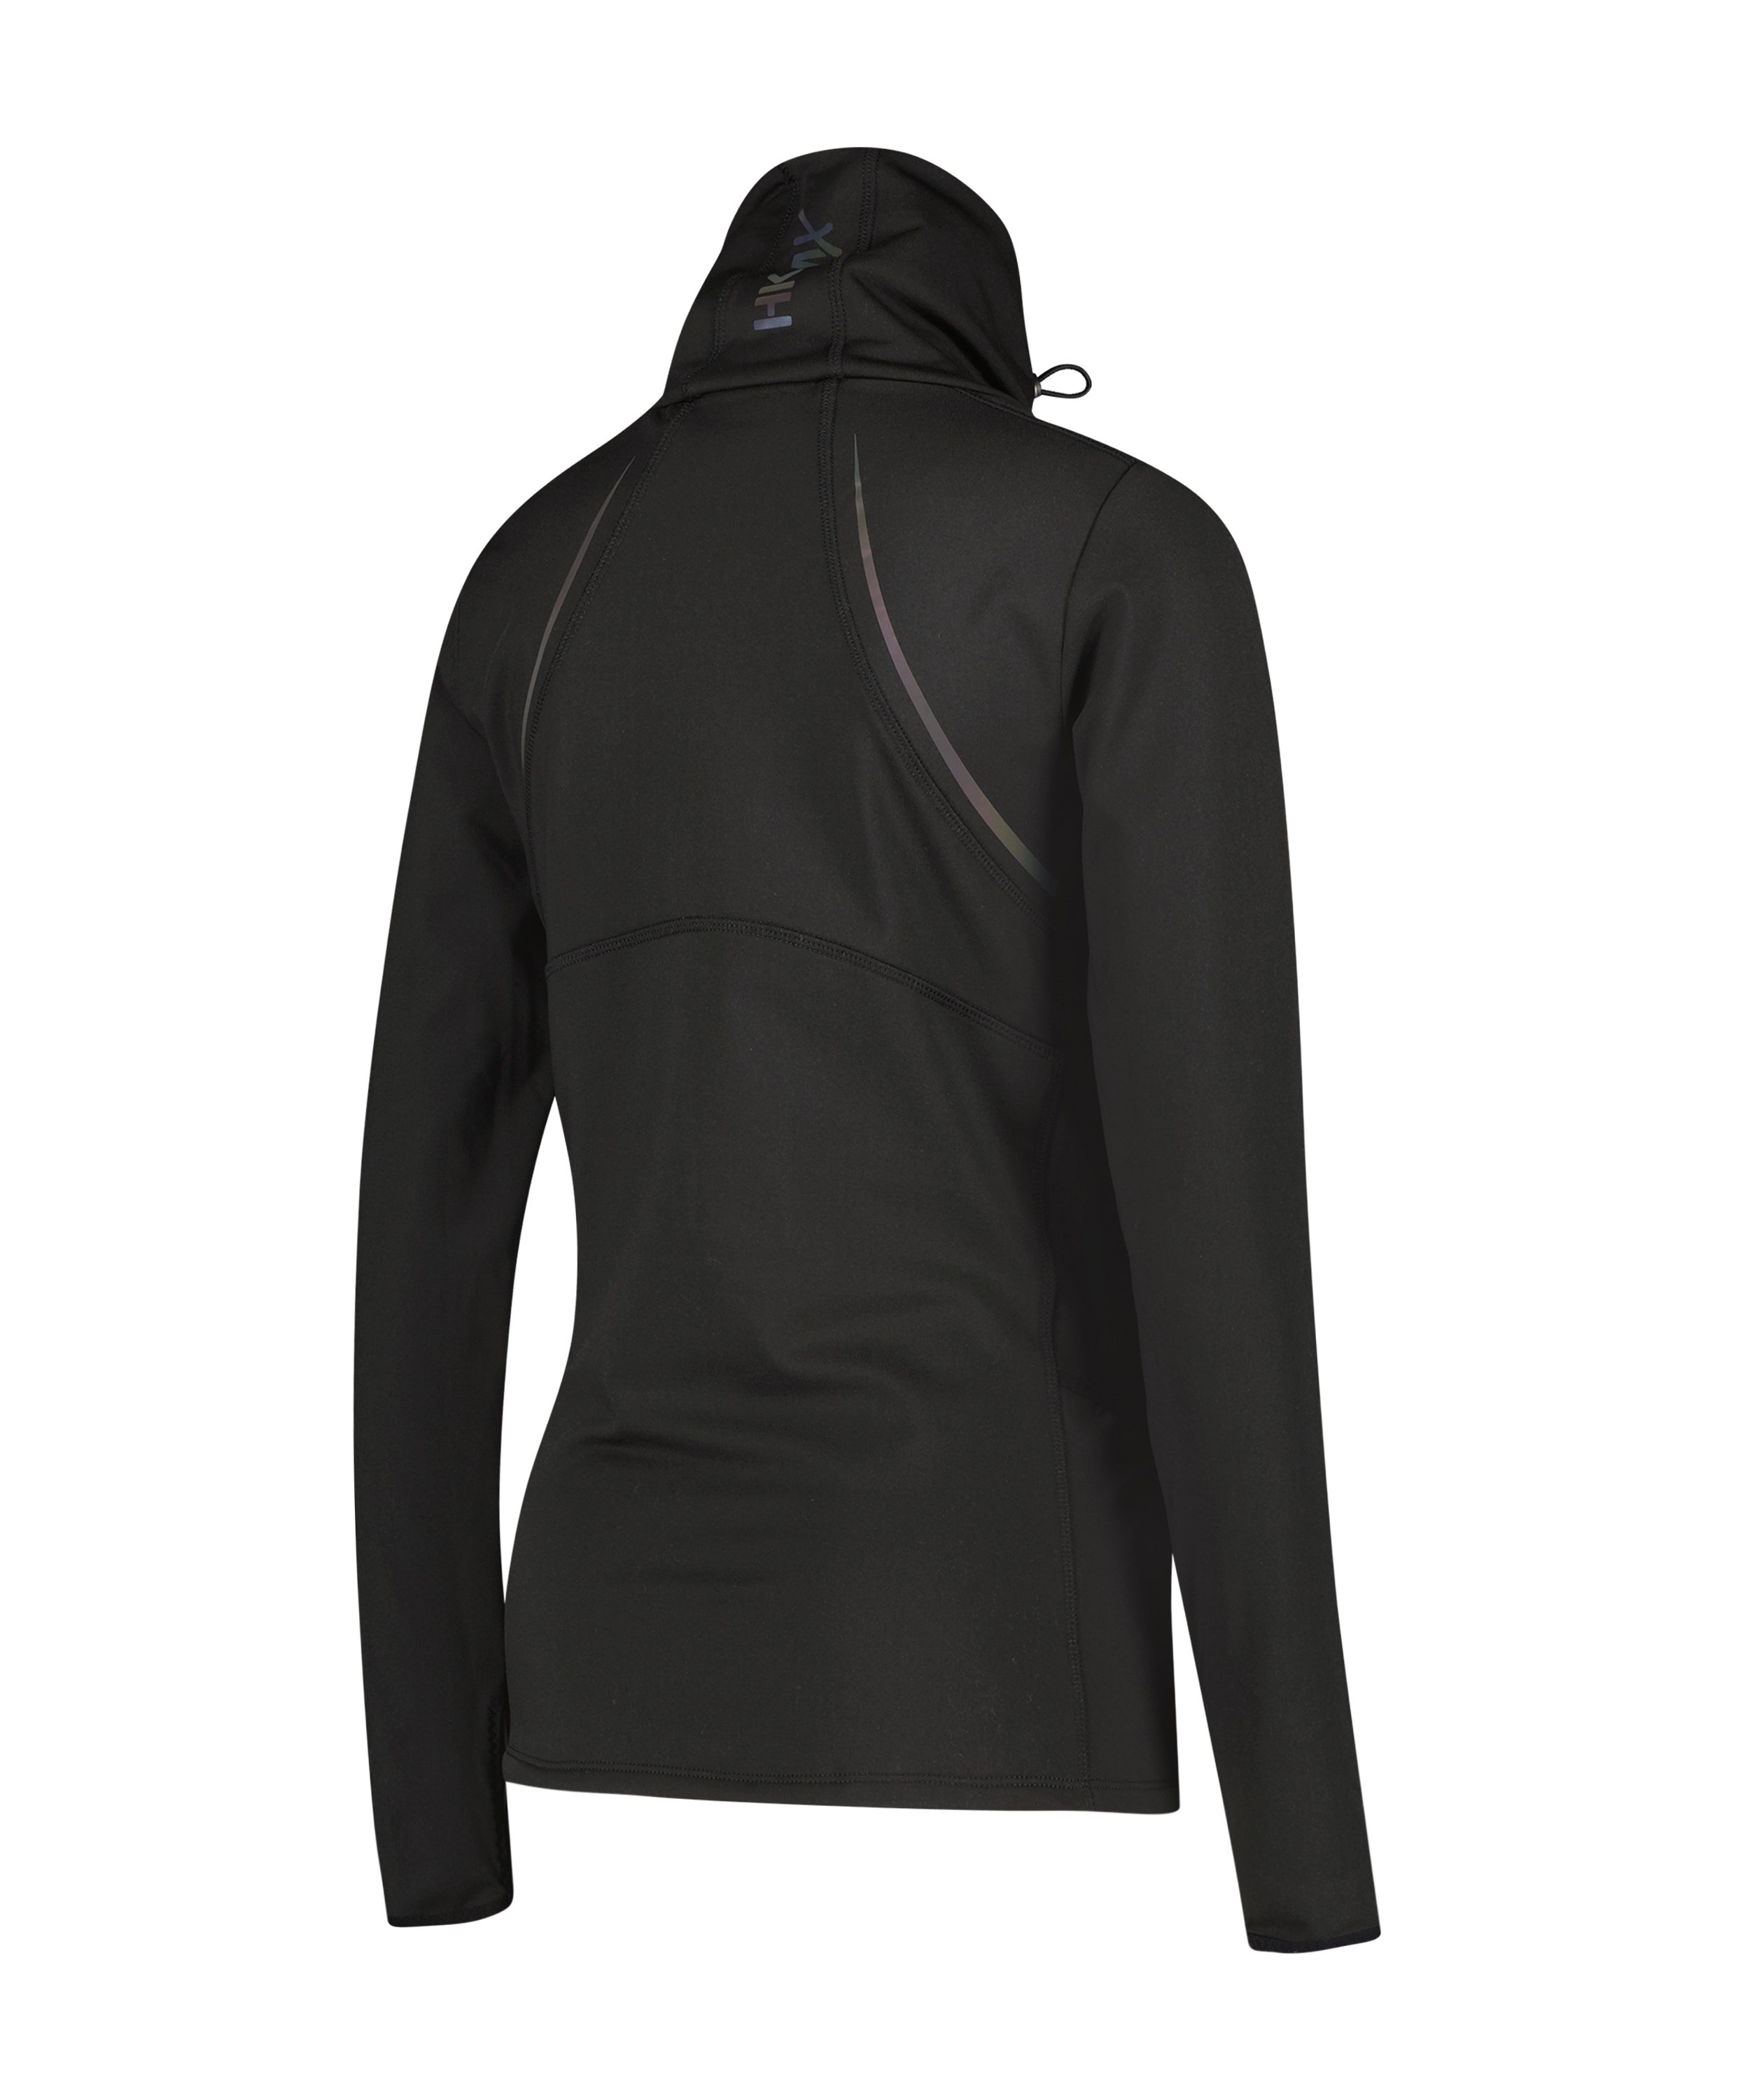 HKMX Sport jacket Winter, Black, main